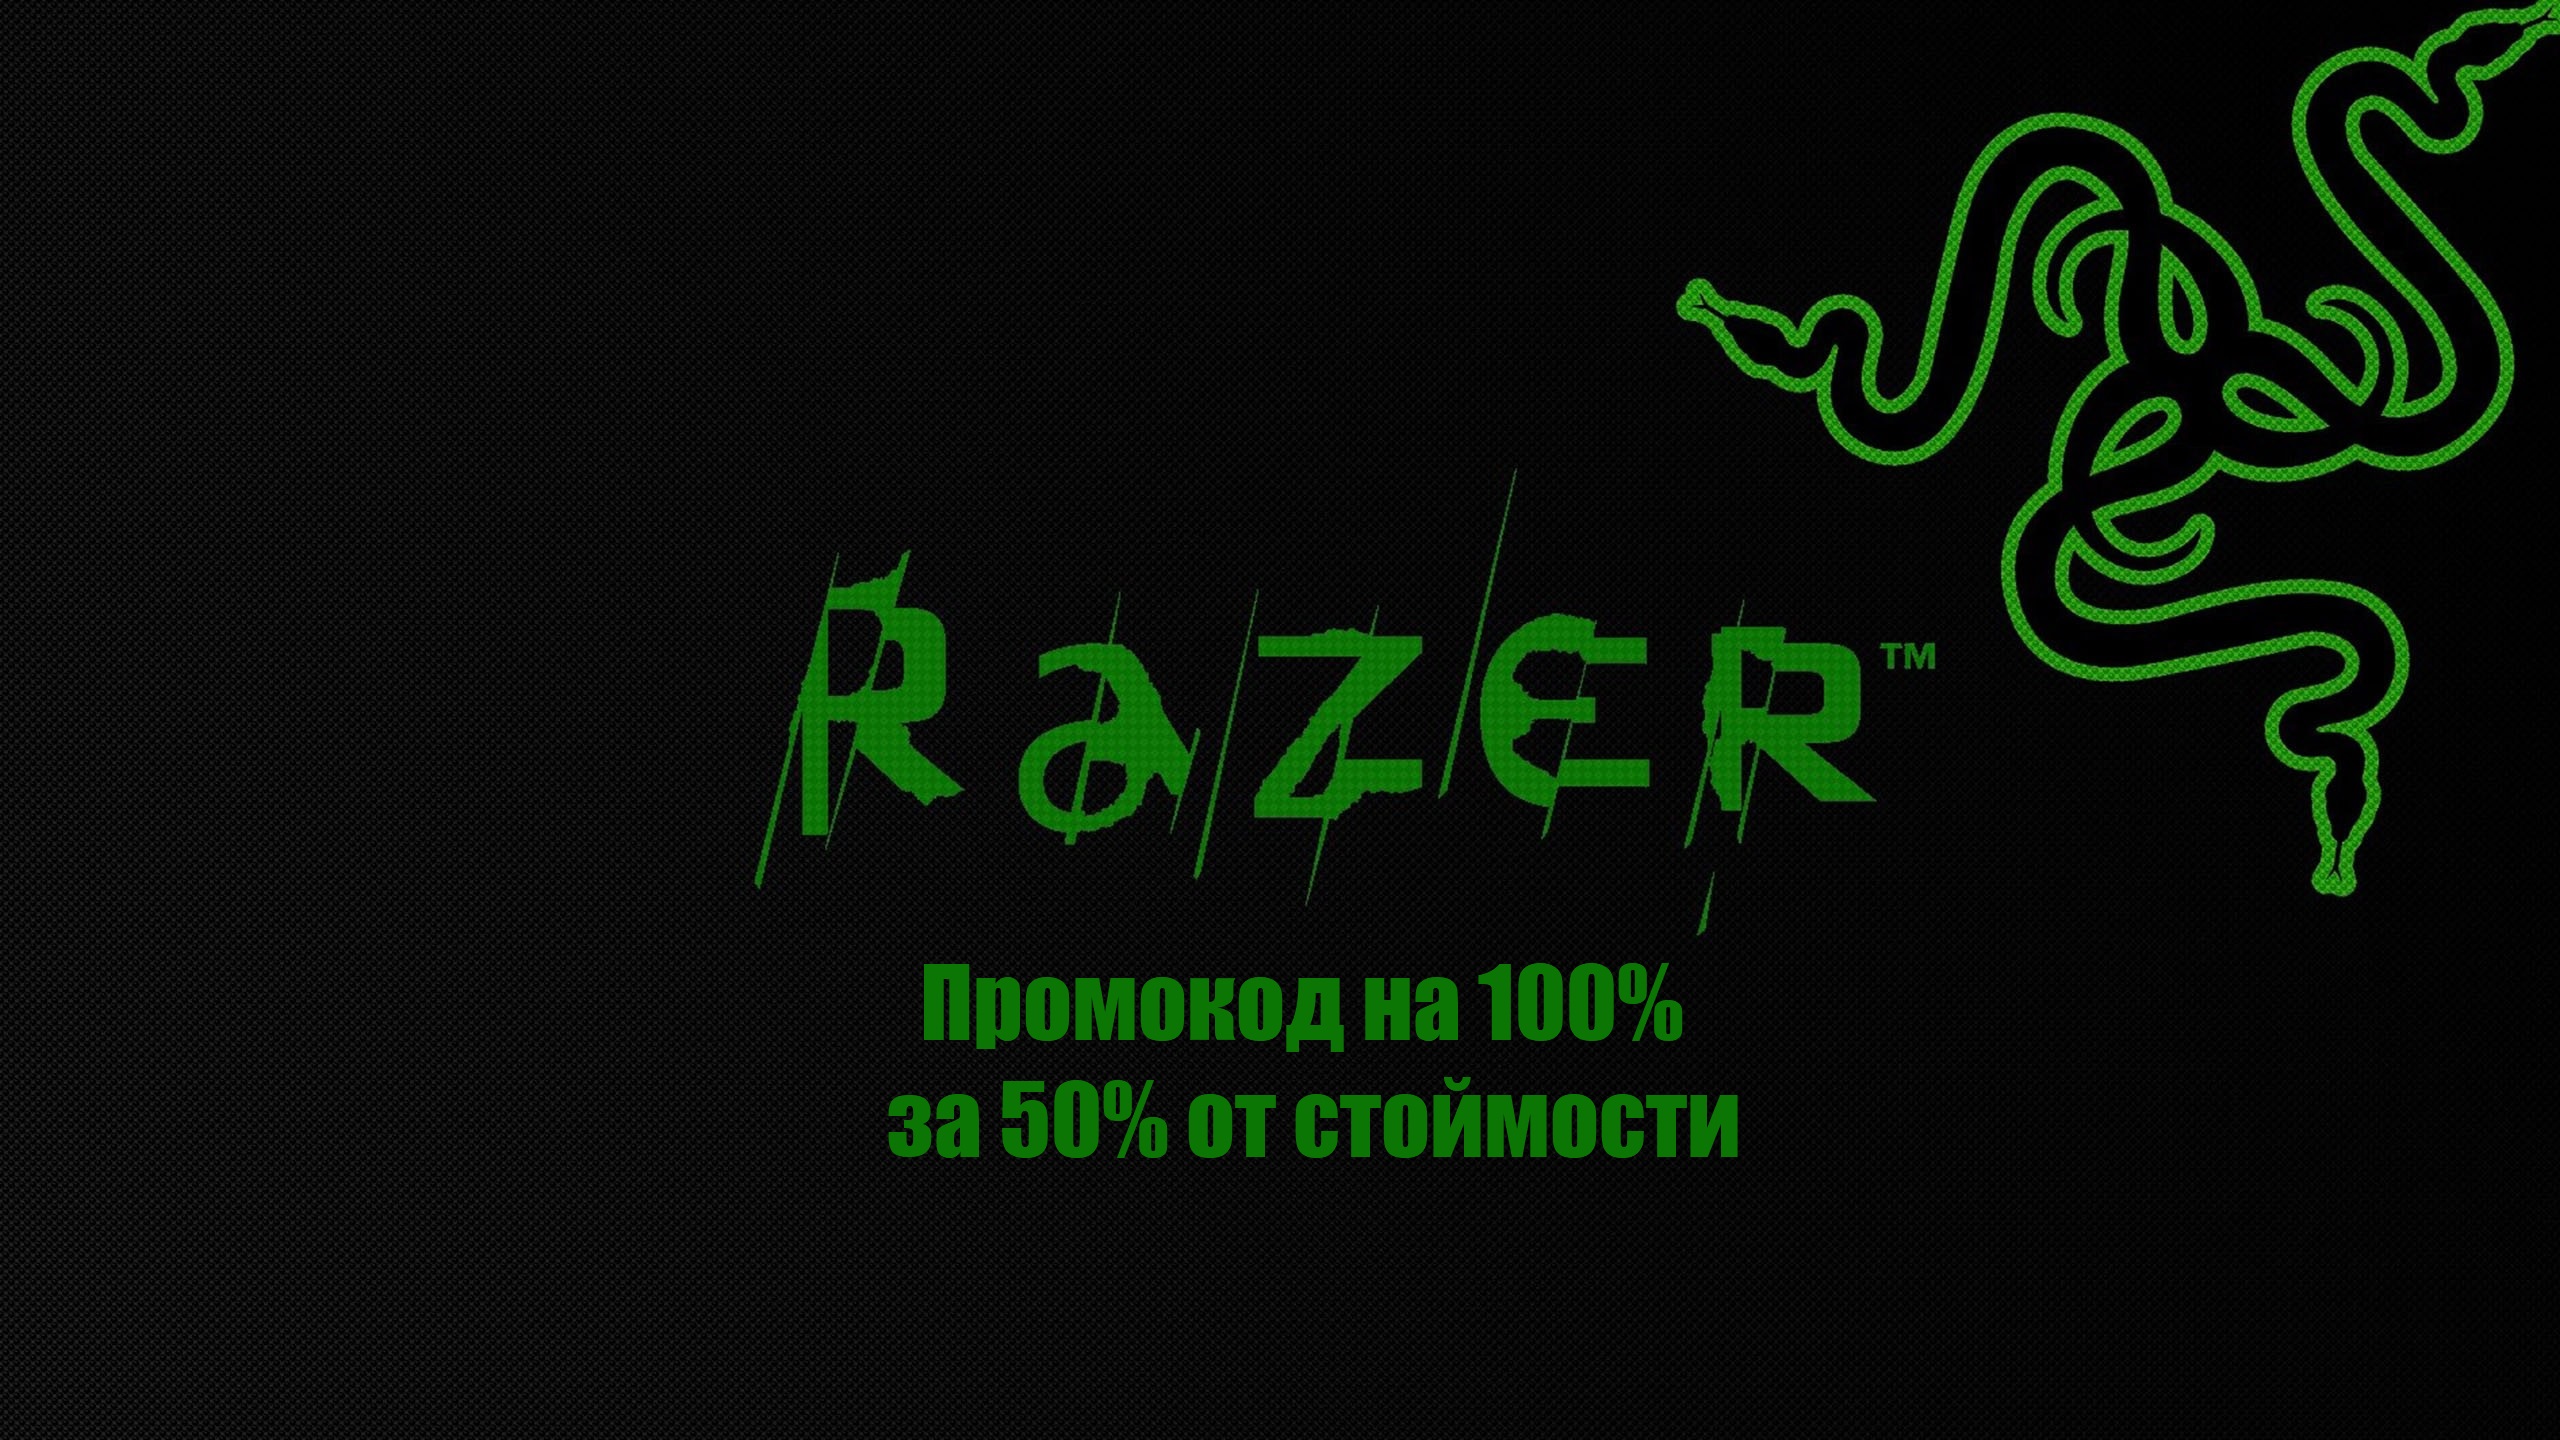 minimalism-text-logo-green-brand-Razer-Inc-line-number-computer-wallpaper-font-207437.jpg